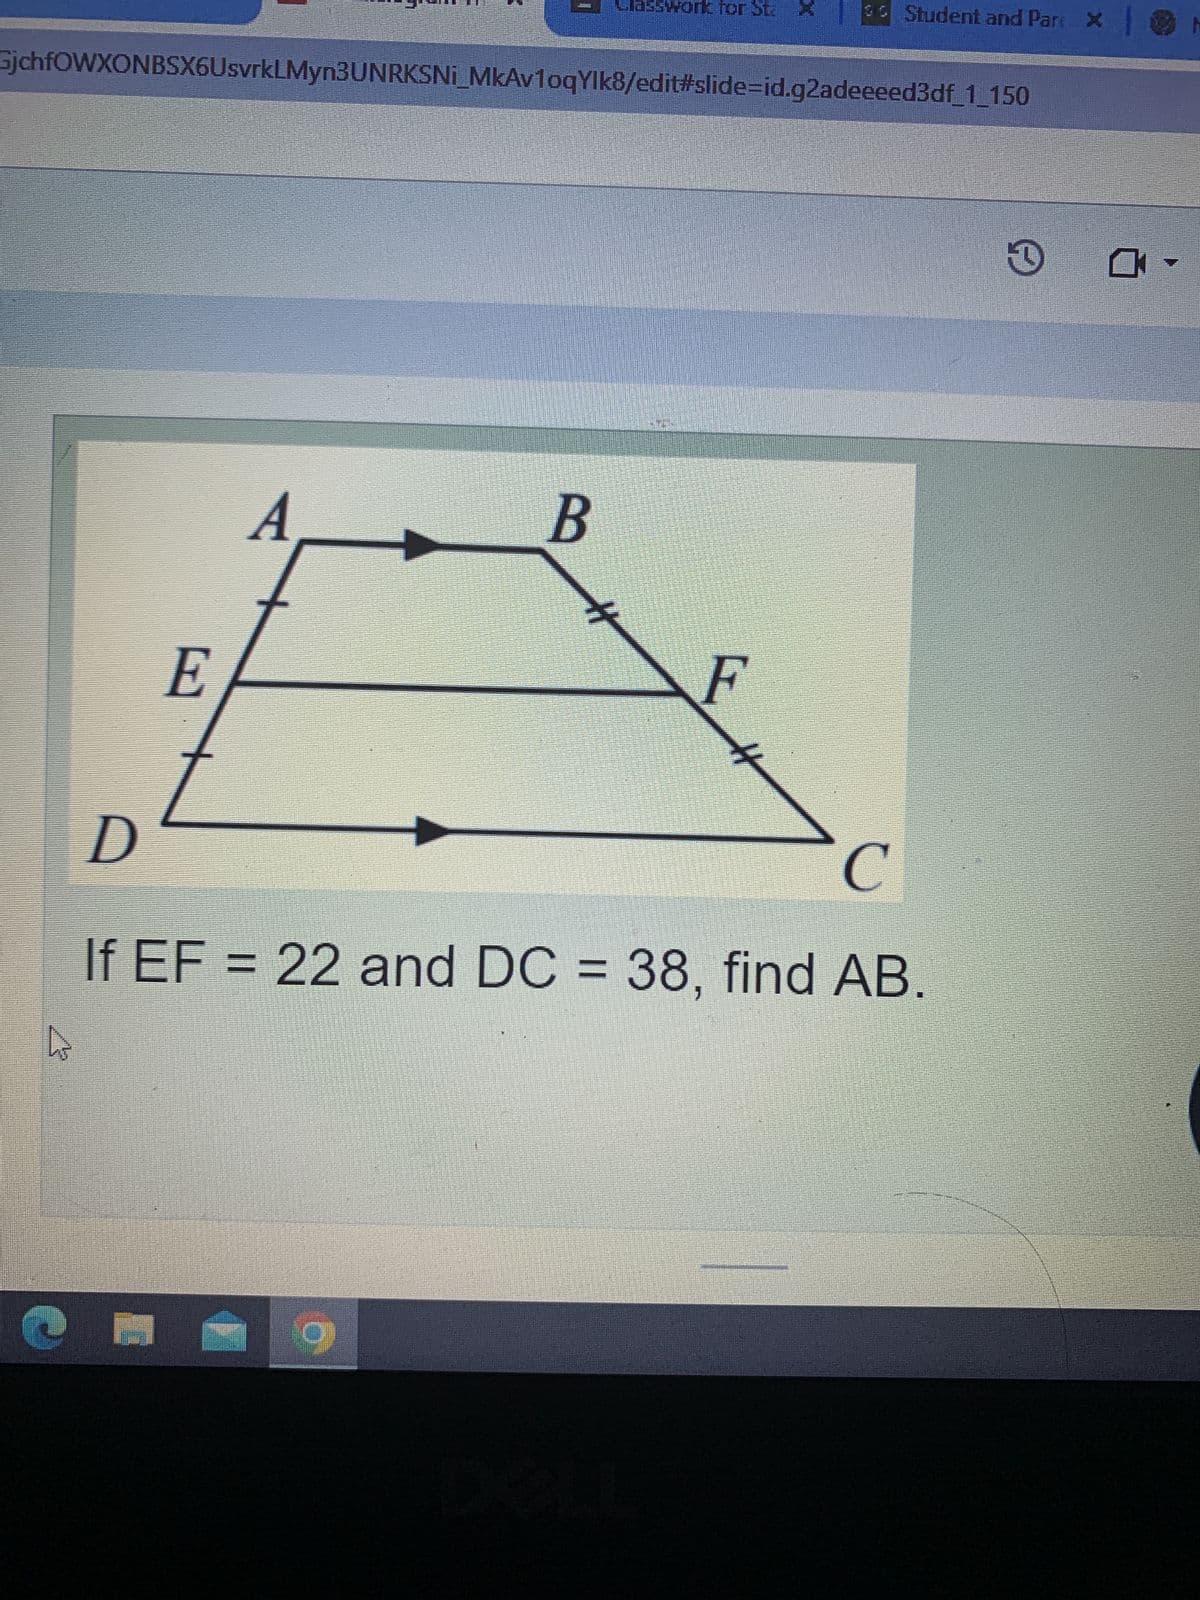 GjchfOWXONBSX6UsvrkLMyn3UNRKSNi_MkAv1oqYlk8/edit#slide-id.g2adeeeed3df_1_150
E
M
A
Classwork for Sta
B
Student and Pare X | 0
D
C
If EF = 22 and DC = 38, find AB.
G
0-